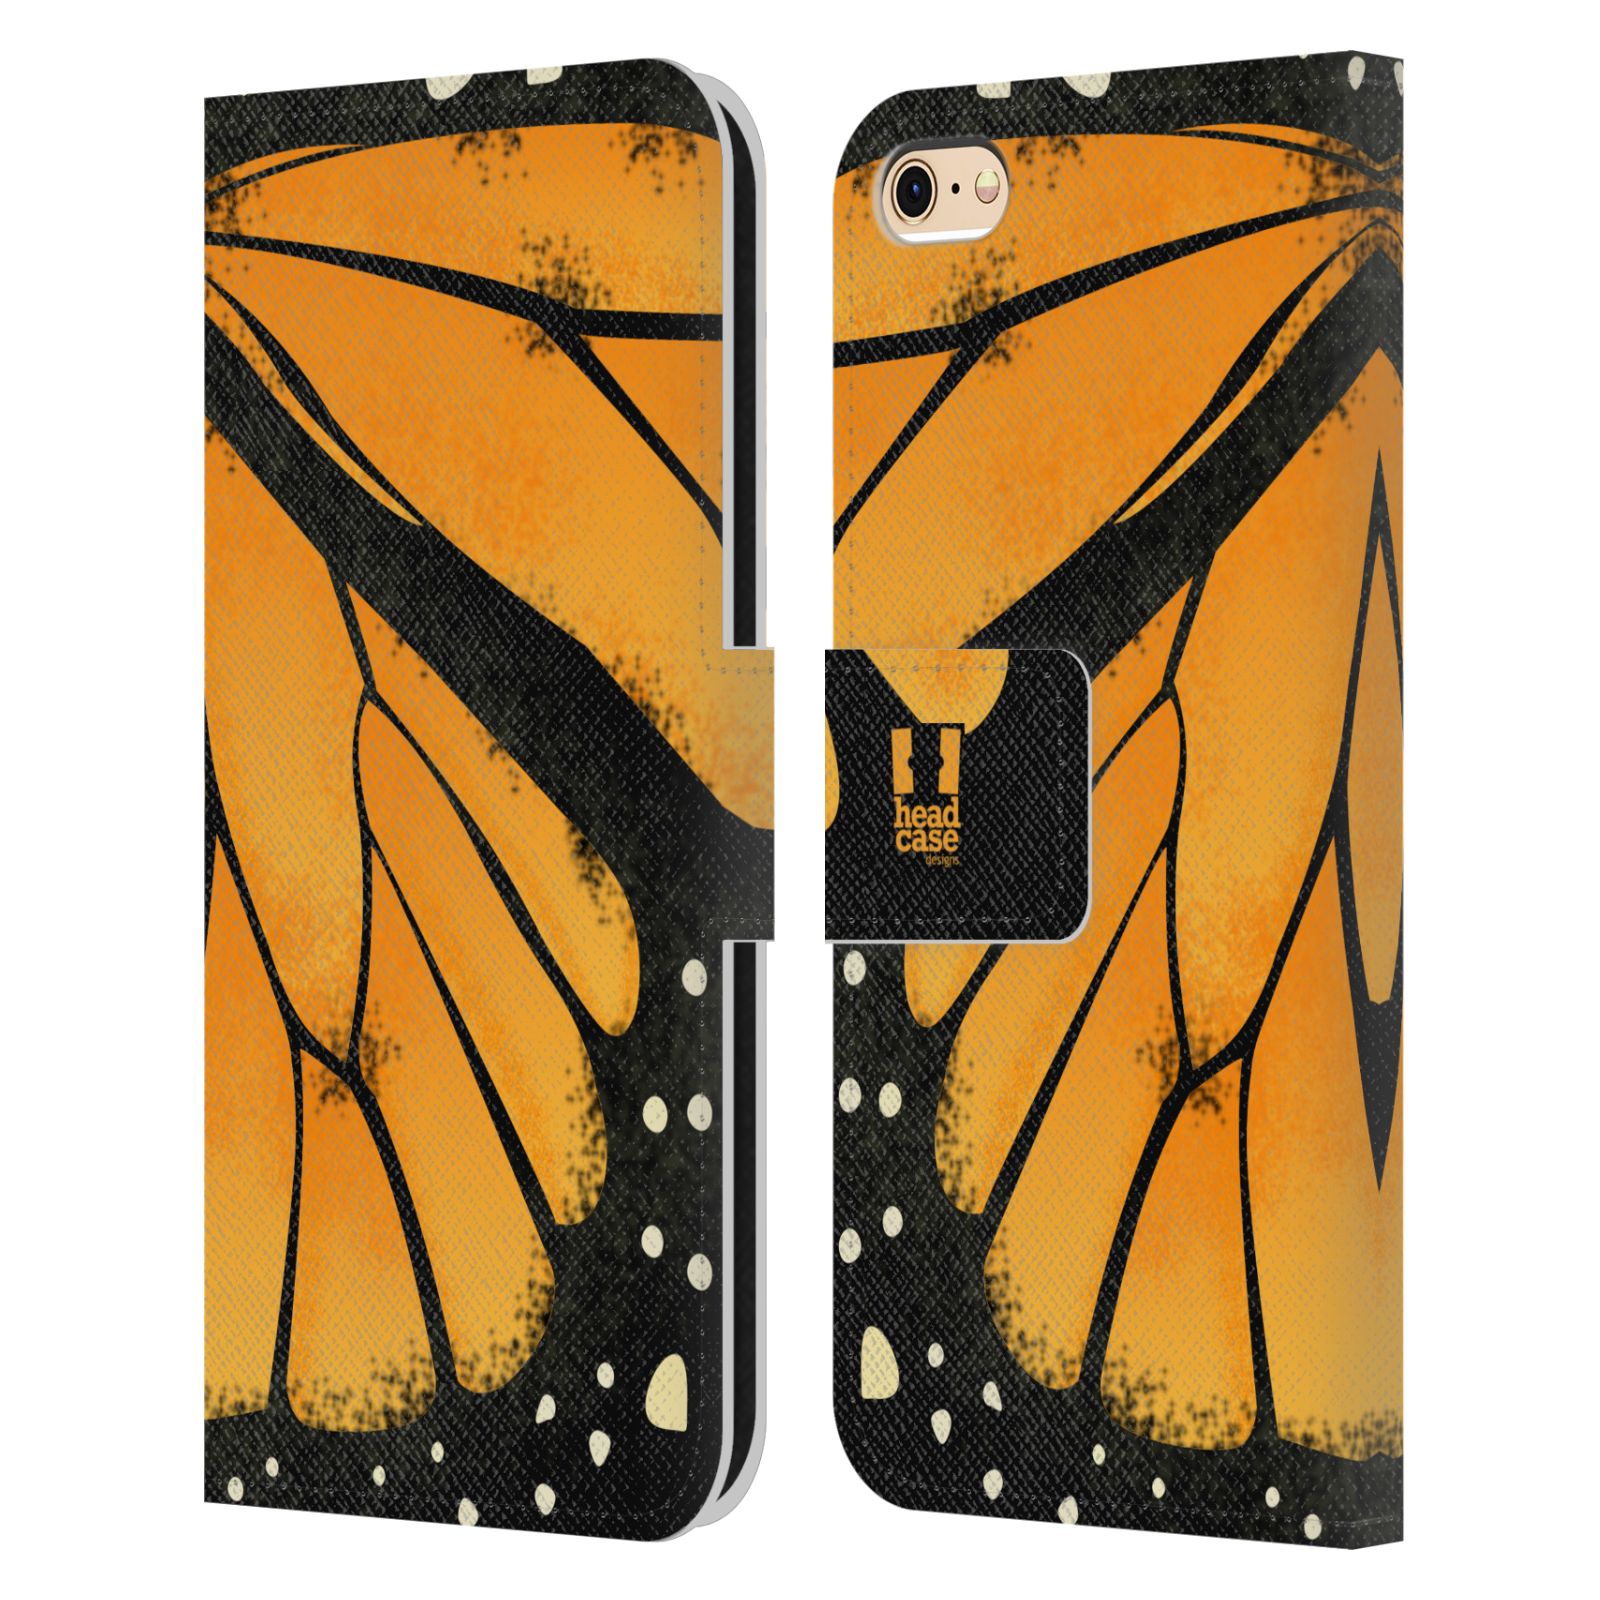 HEAD CASE Flipové pouzdro pro mobil Apple Iphone 6/6s motýl a křídla kreslený vzor MONARCHA žlutá